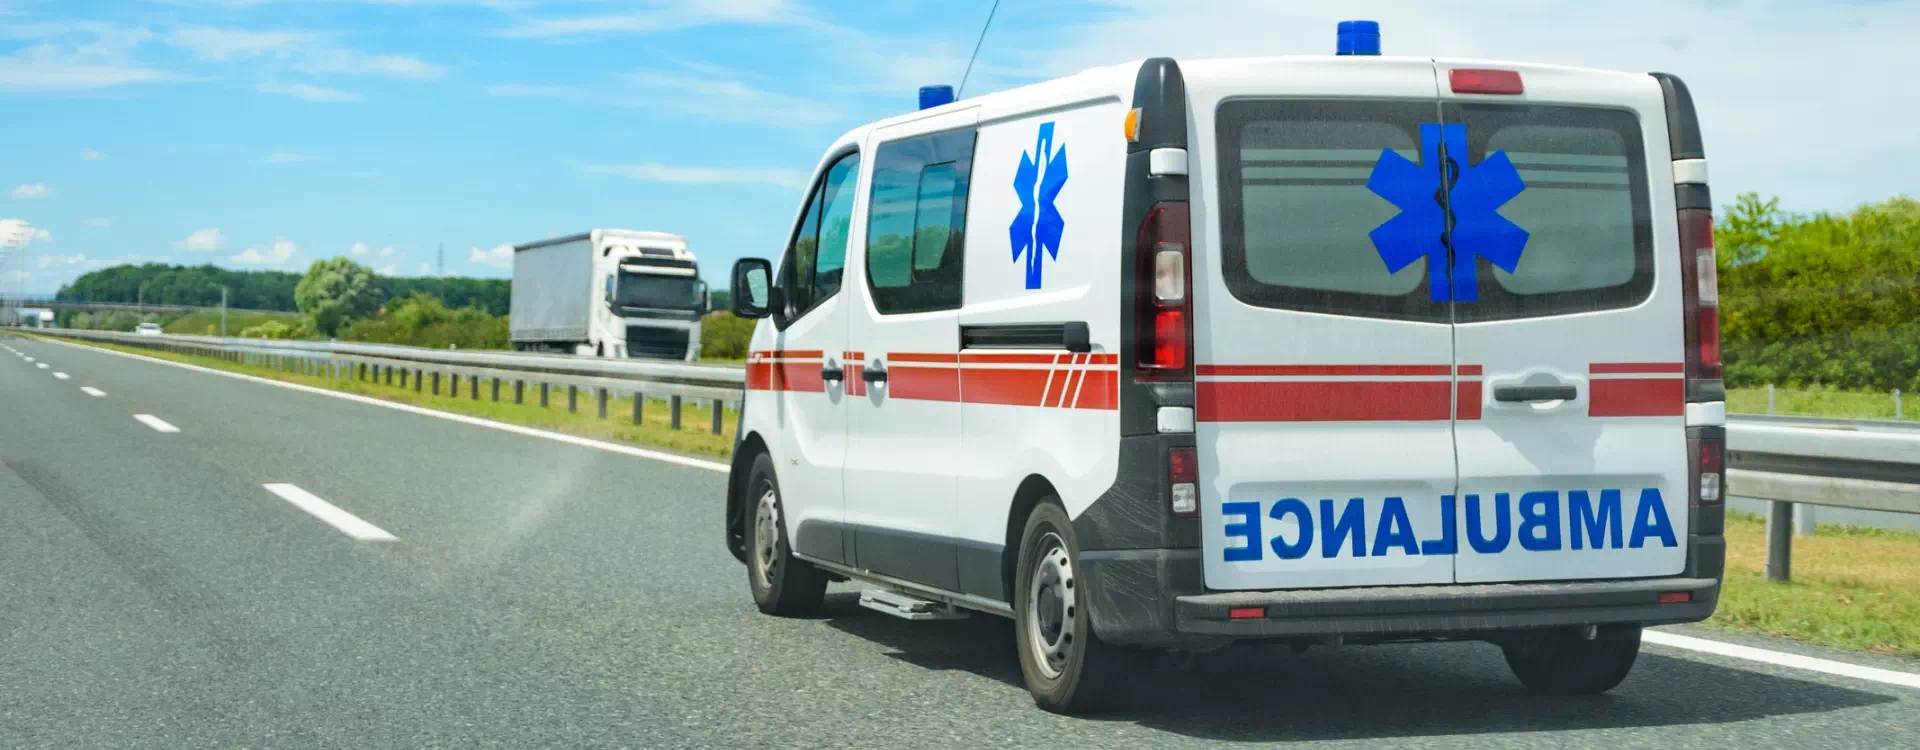 ambulans w drodze